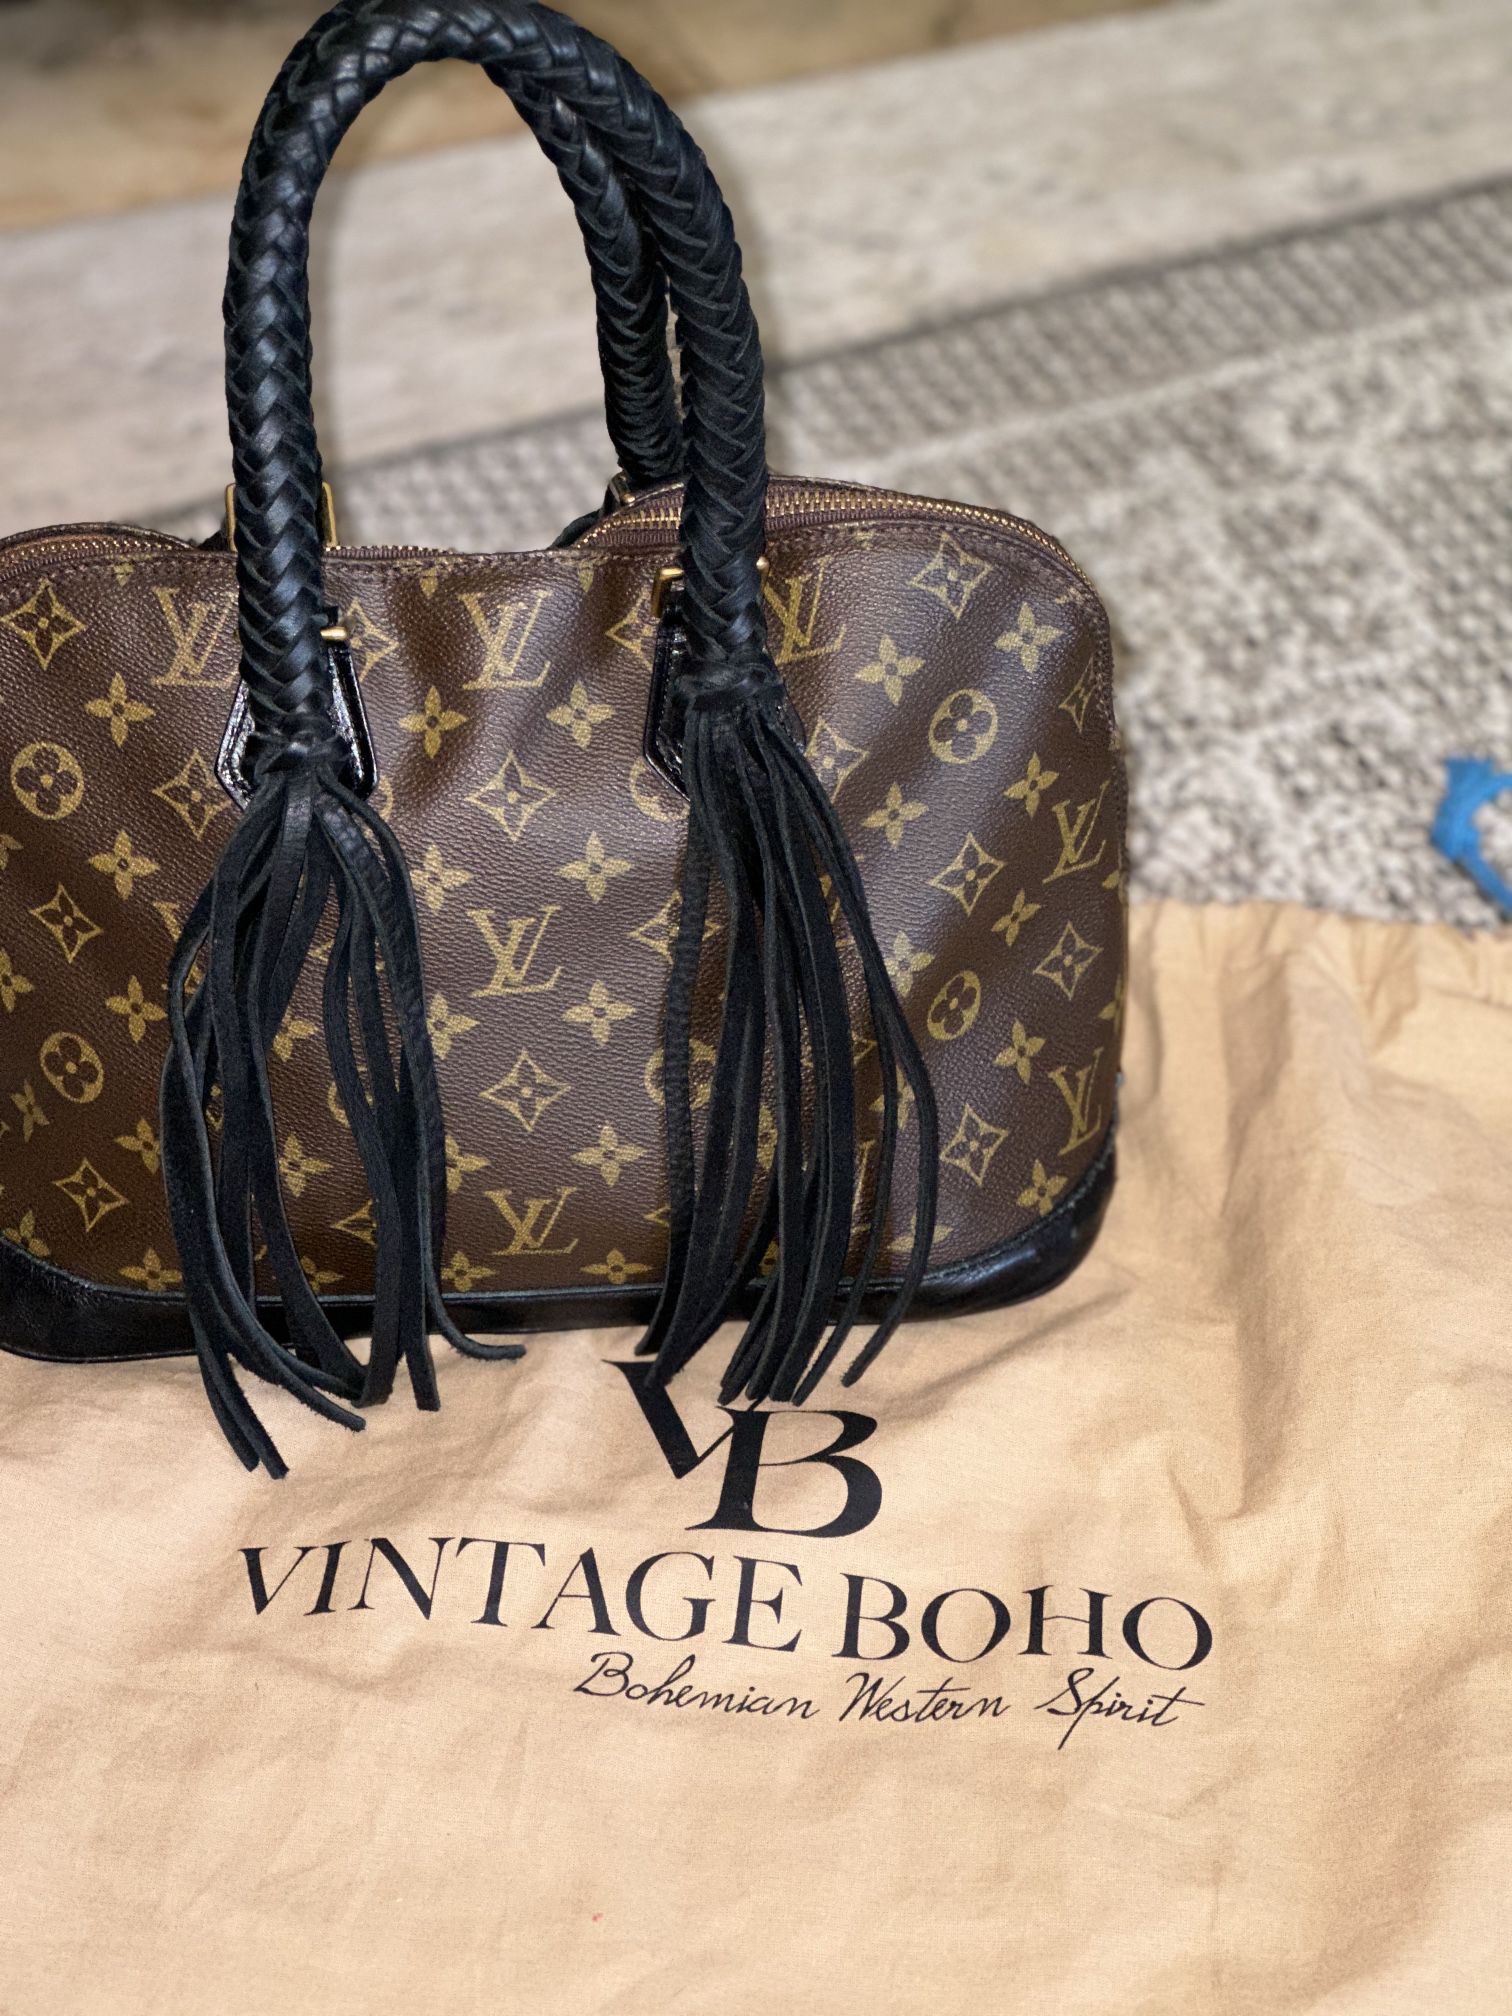 Vintage Boho - Louis Vuitton Handbags